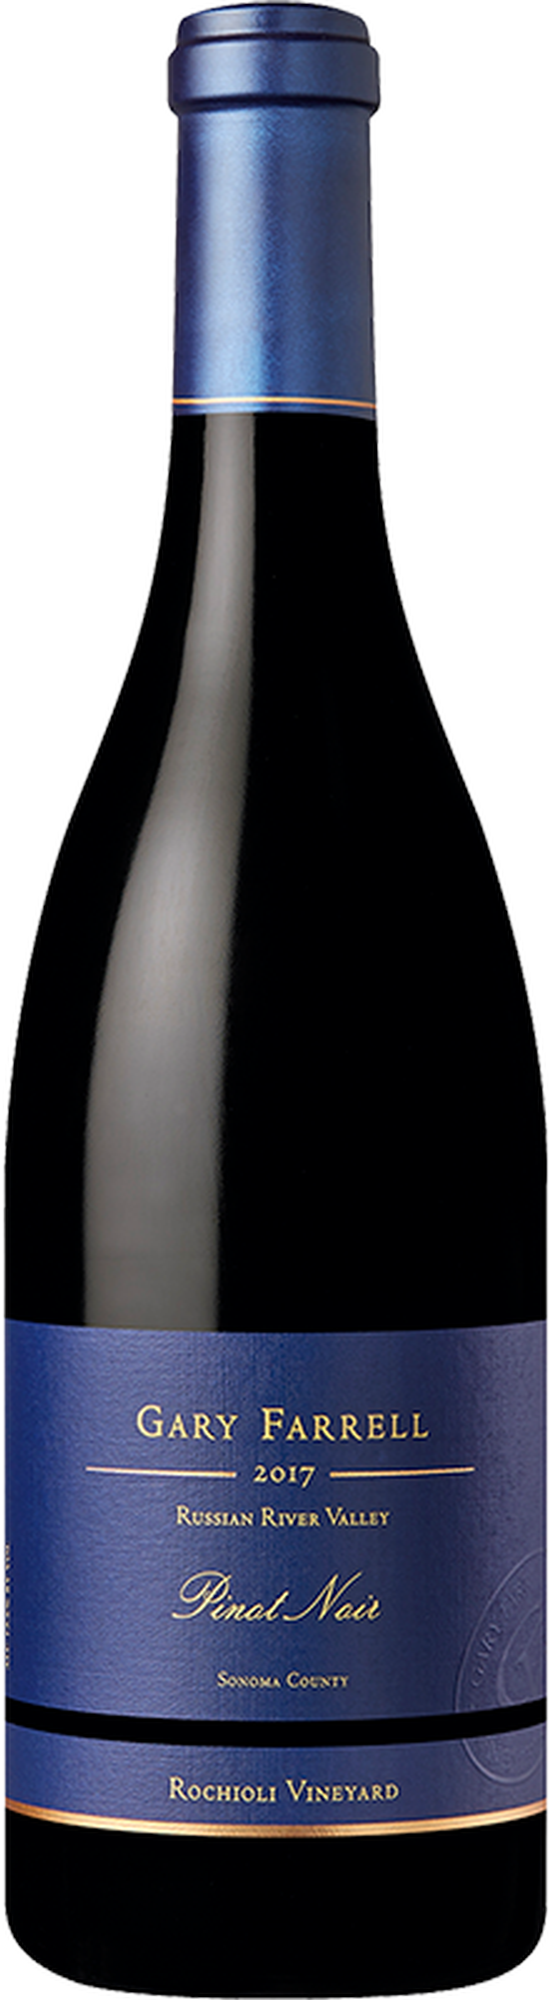 2017 Rochioli Vineyard Pinot Noir 1.5L